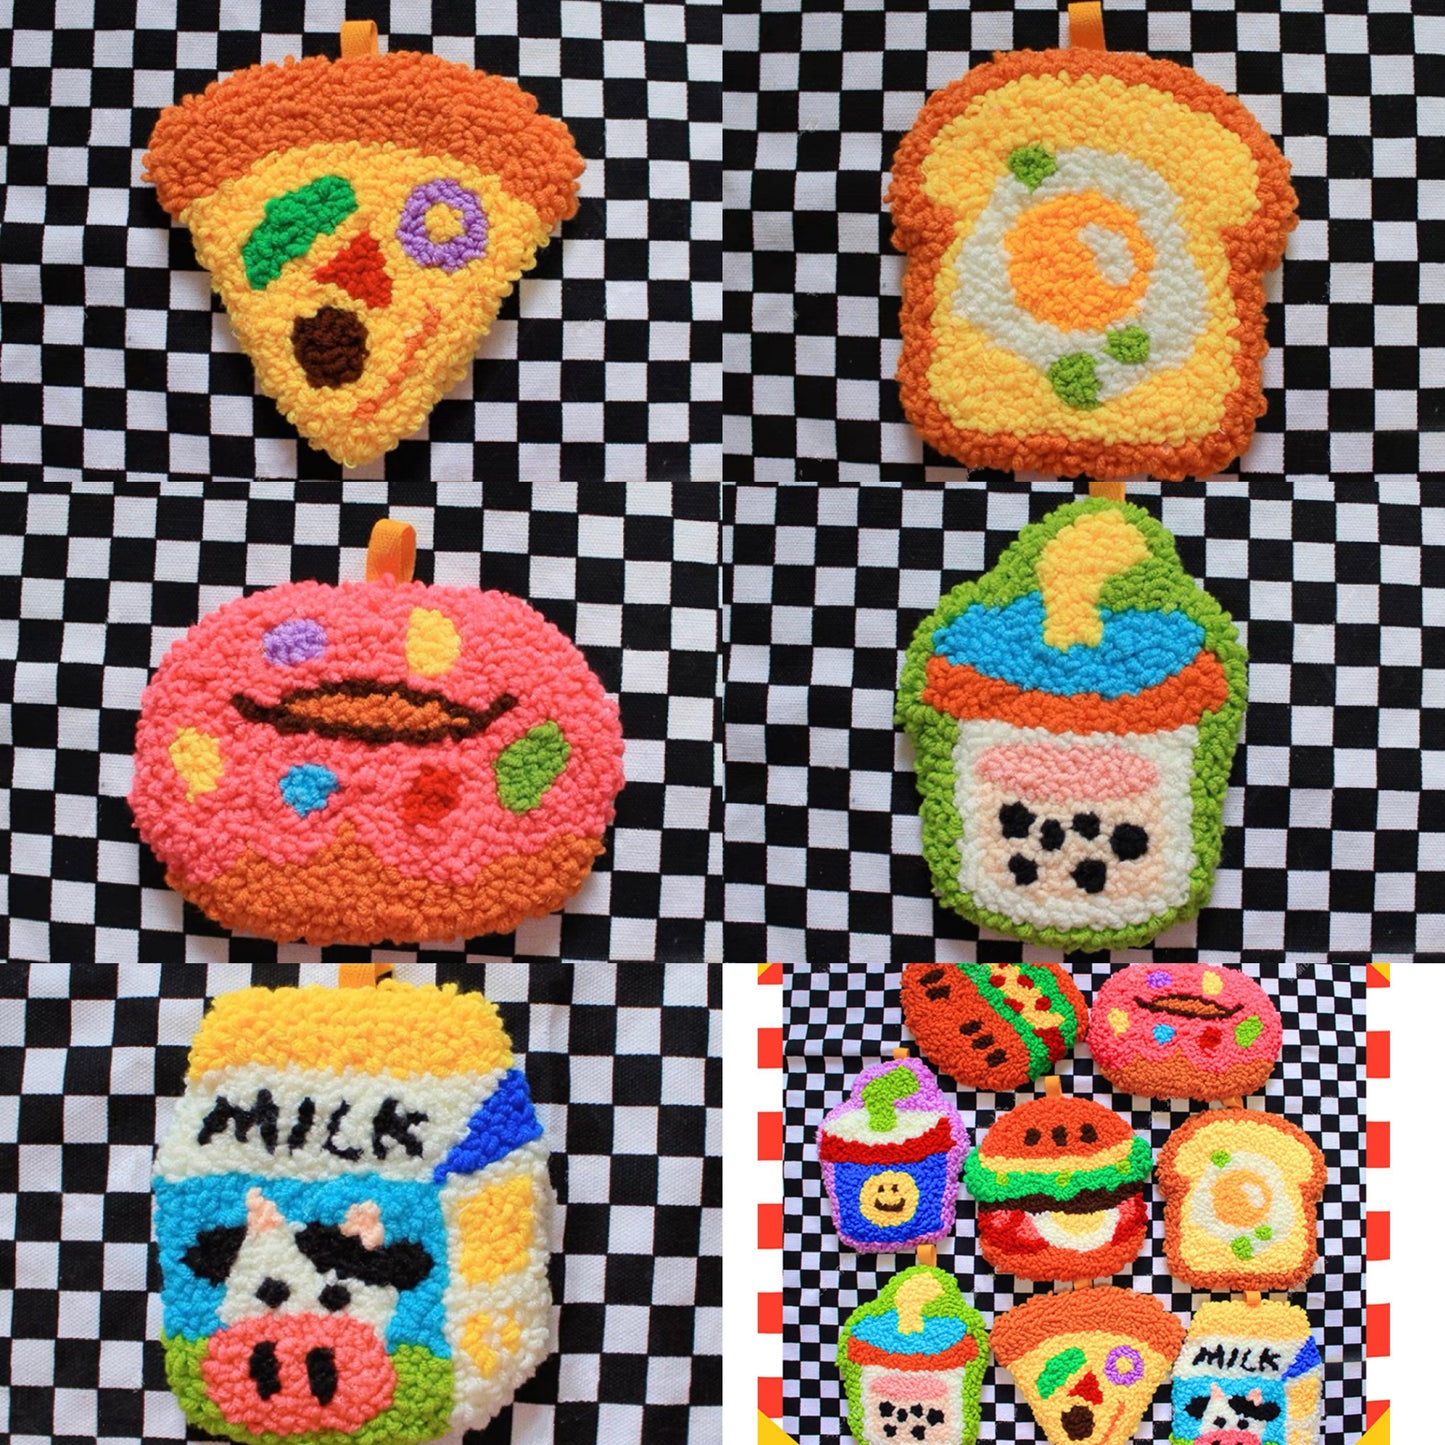 Fast Food Punch Needle Coaster DIY Kit with Yarn Set | Milk Toast Hot Dog Milk Tea Donuts Hamburger Pizza - All materials included